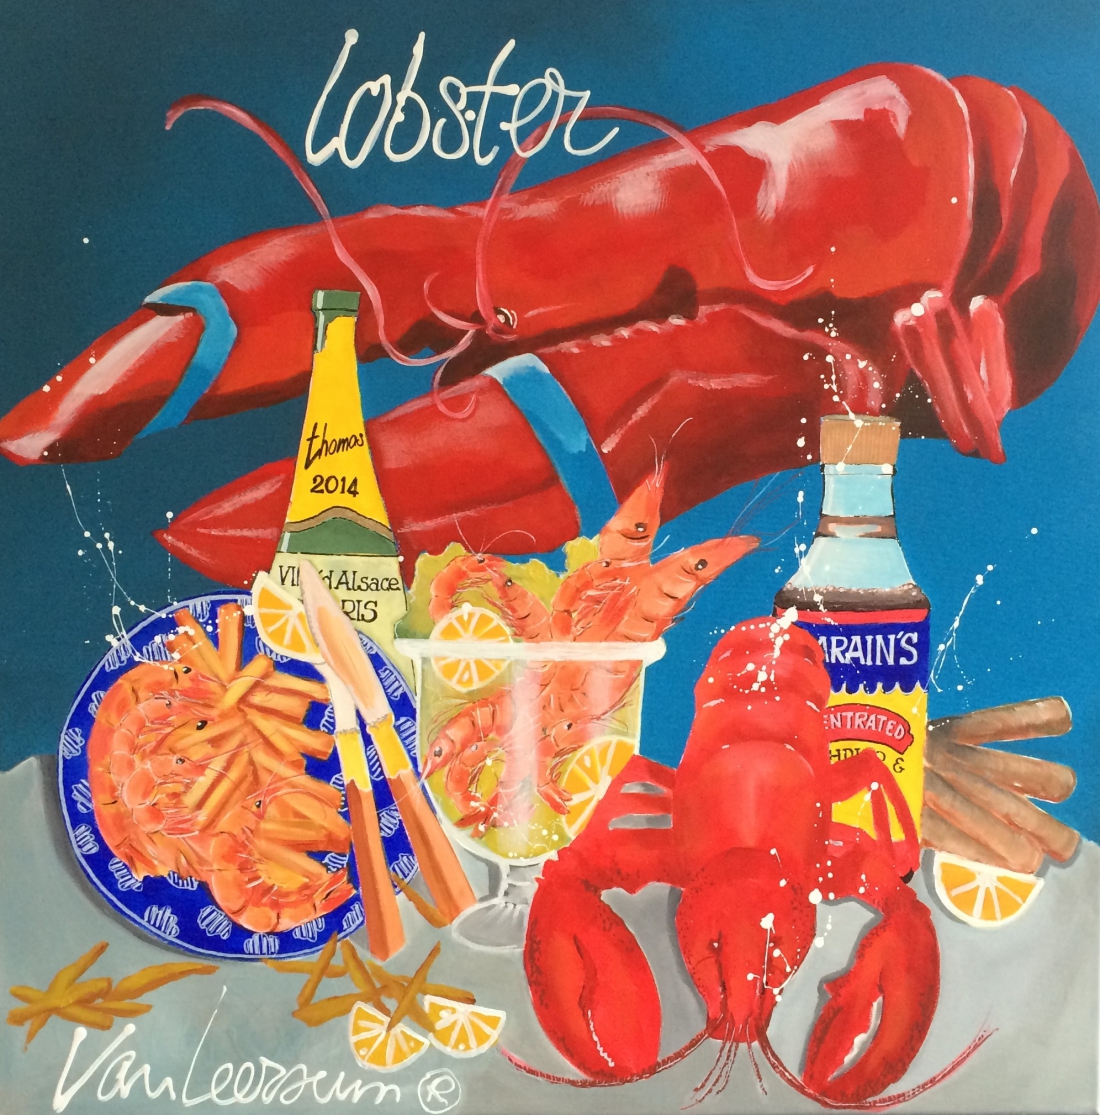 El van Leersum origineel 'Lobster' 80x80